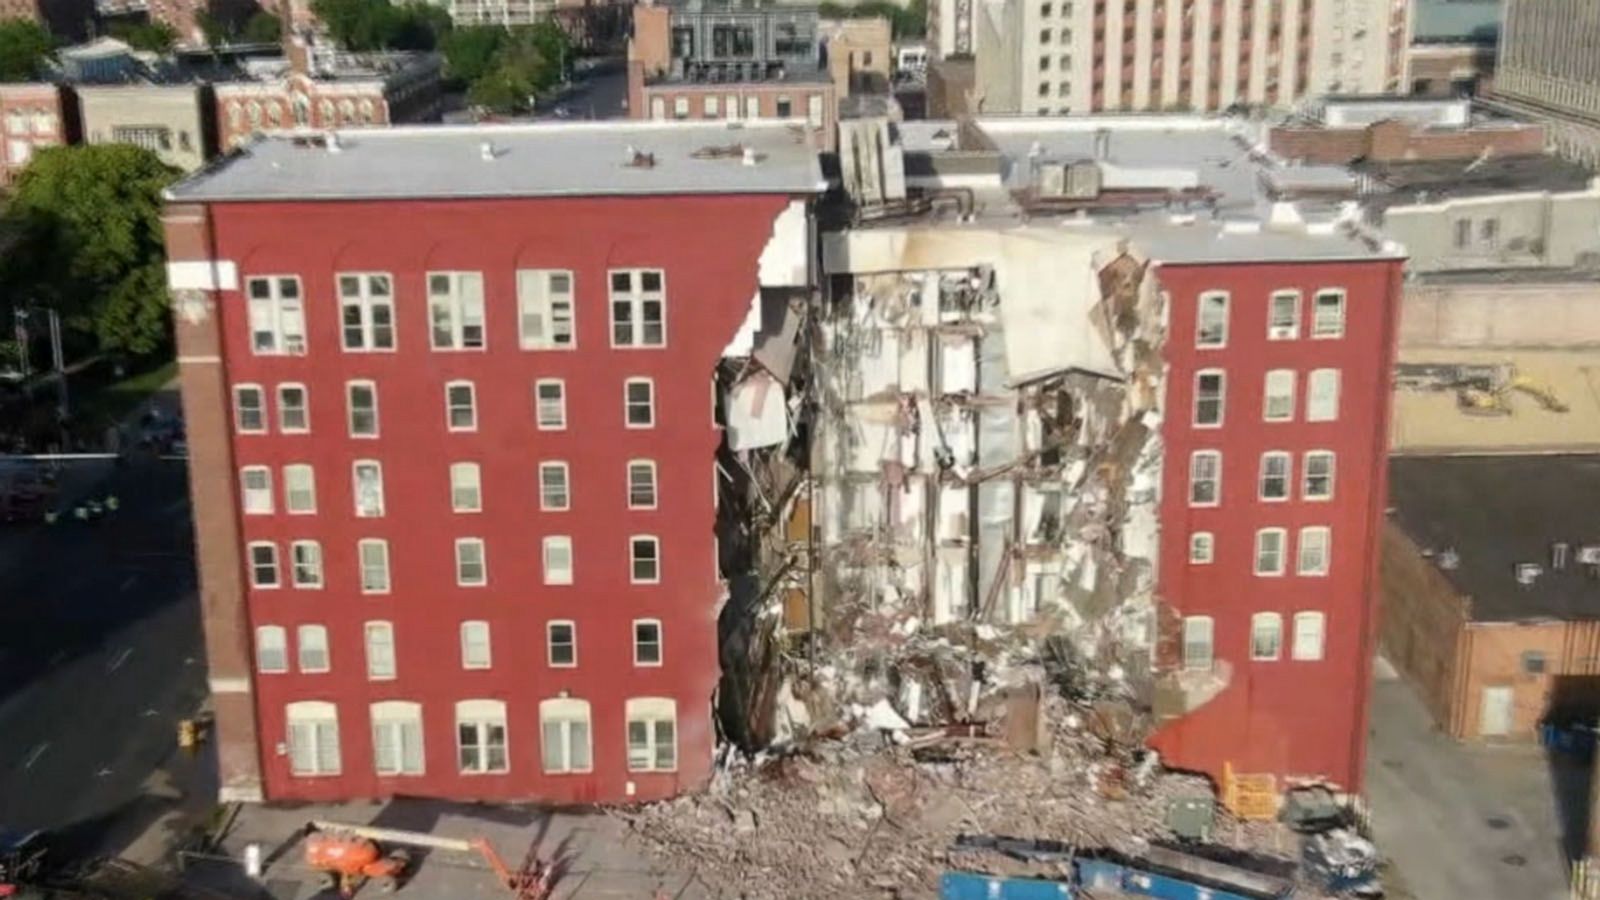 9th survivor found in Iowa building collapse - Good Morning America